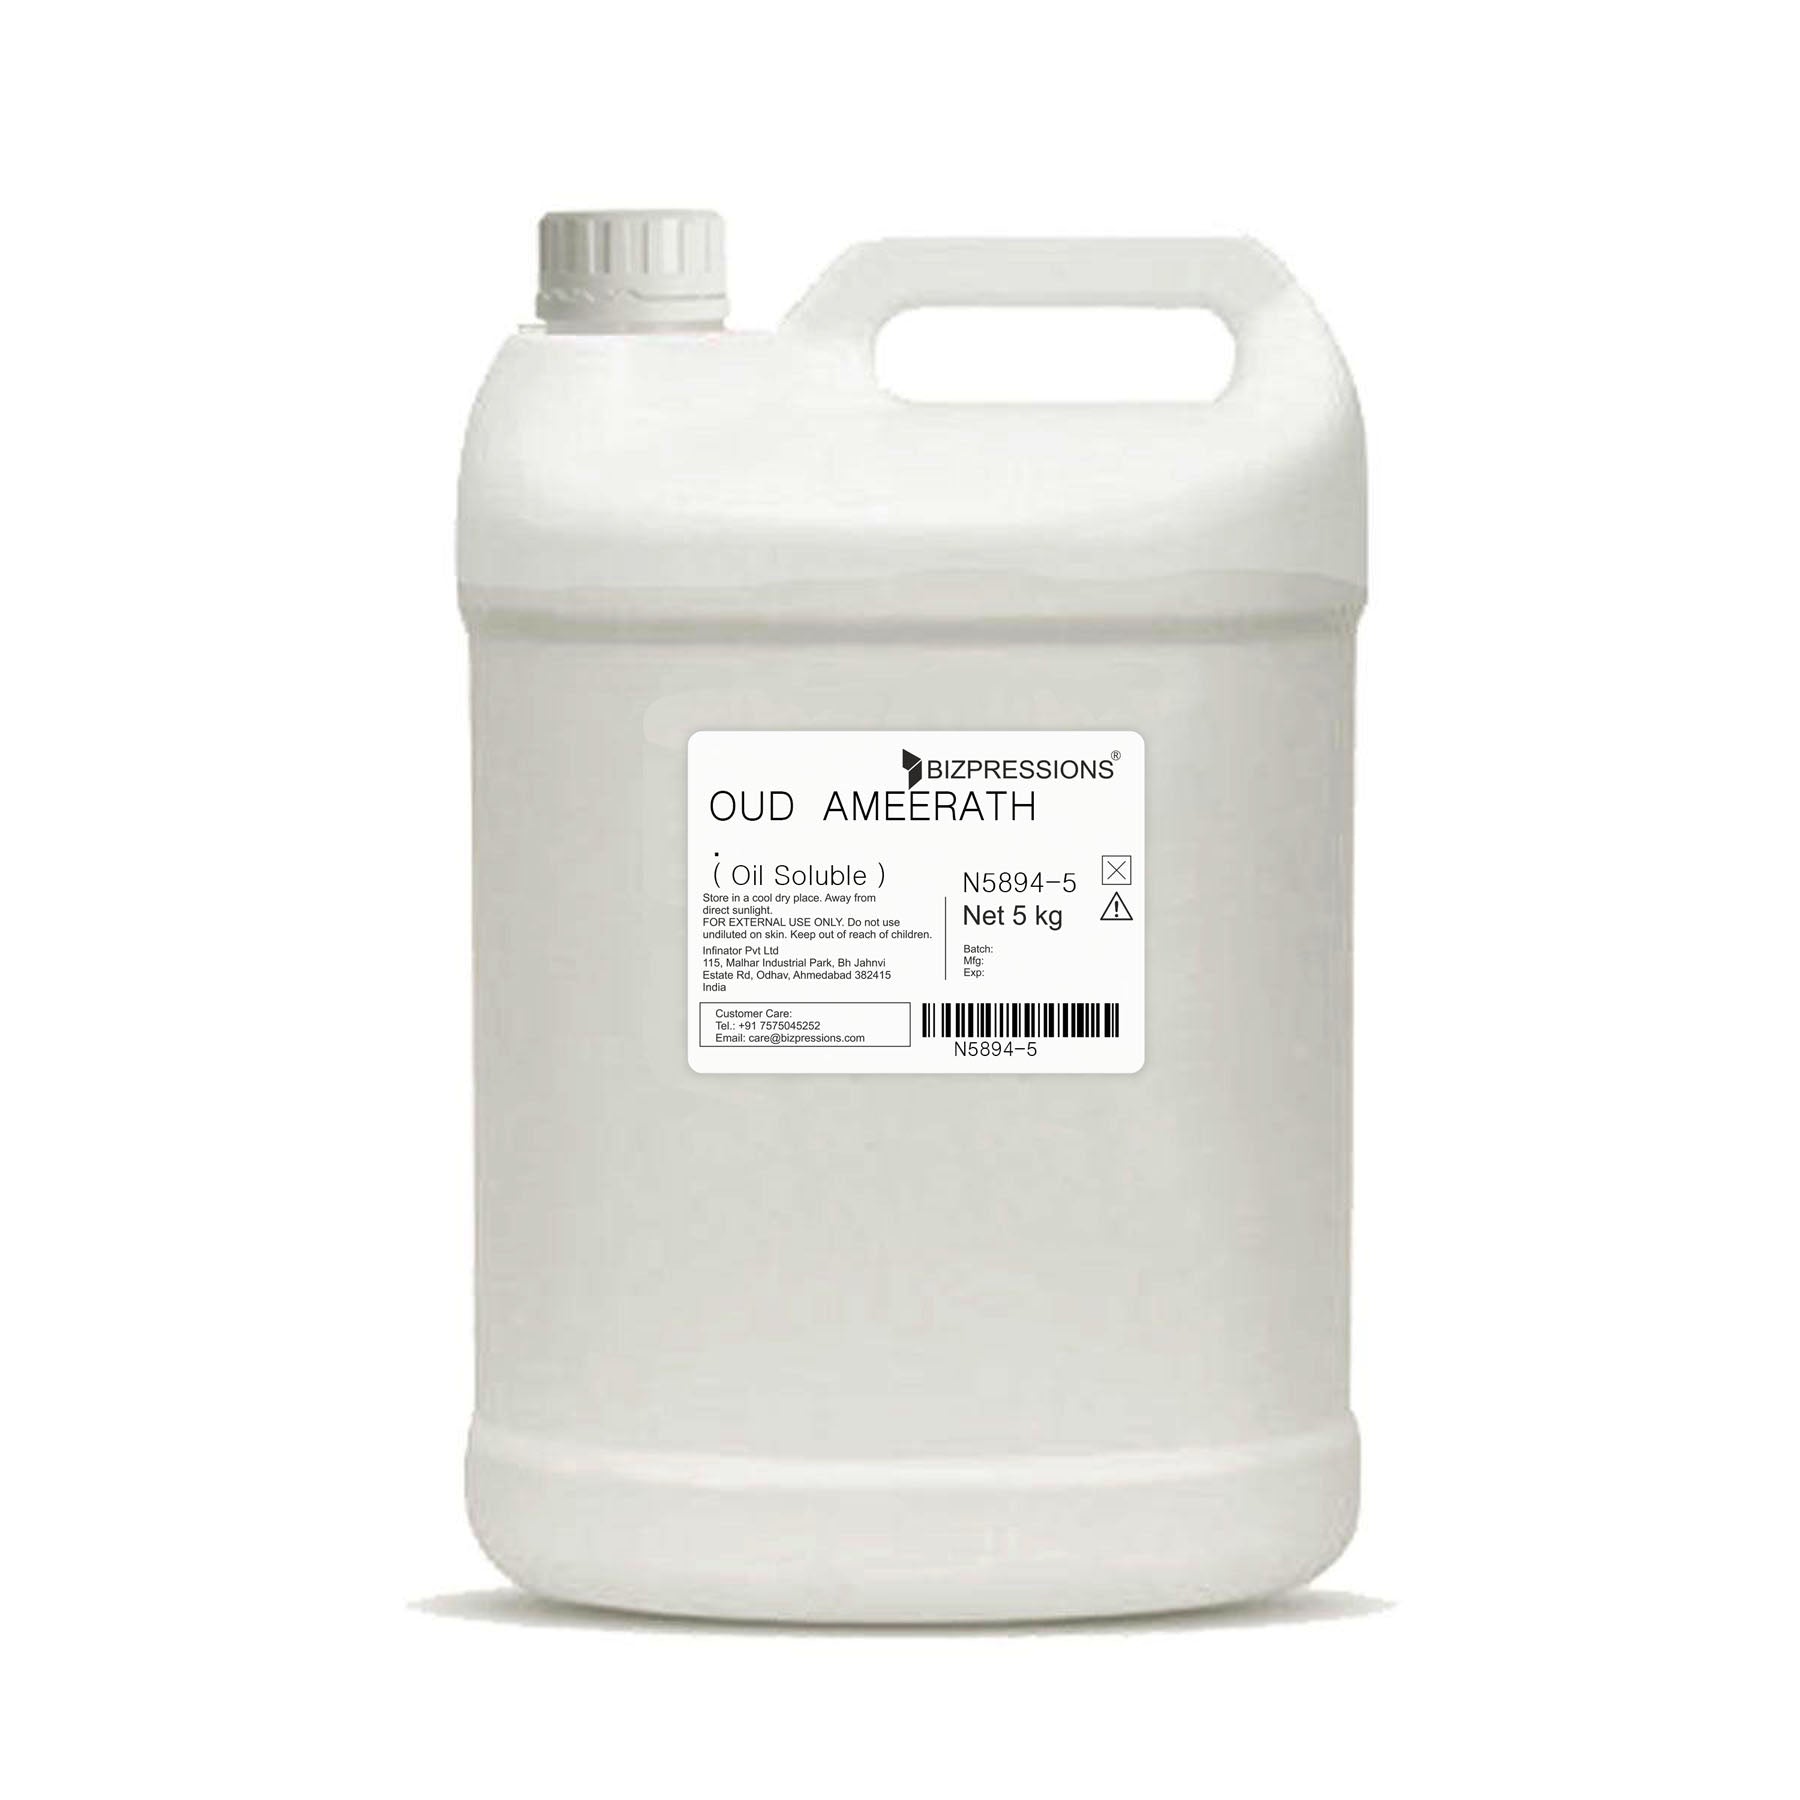 OUD AMEERATH - Fragrance ( Oil Soluble ) - 5 kg